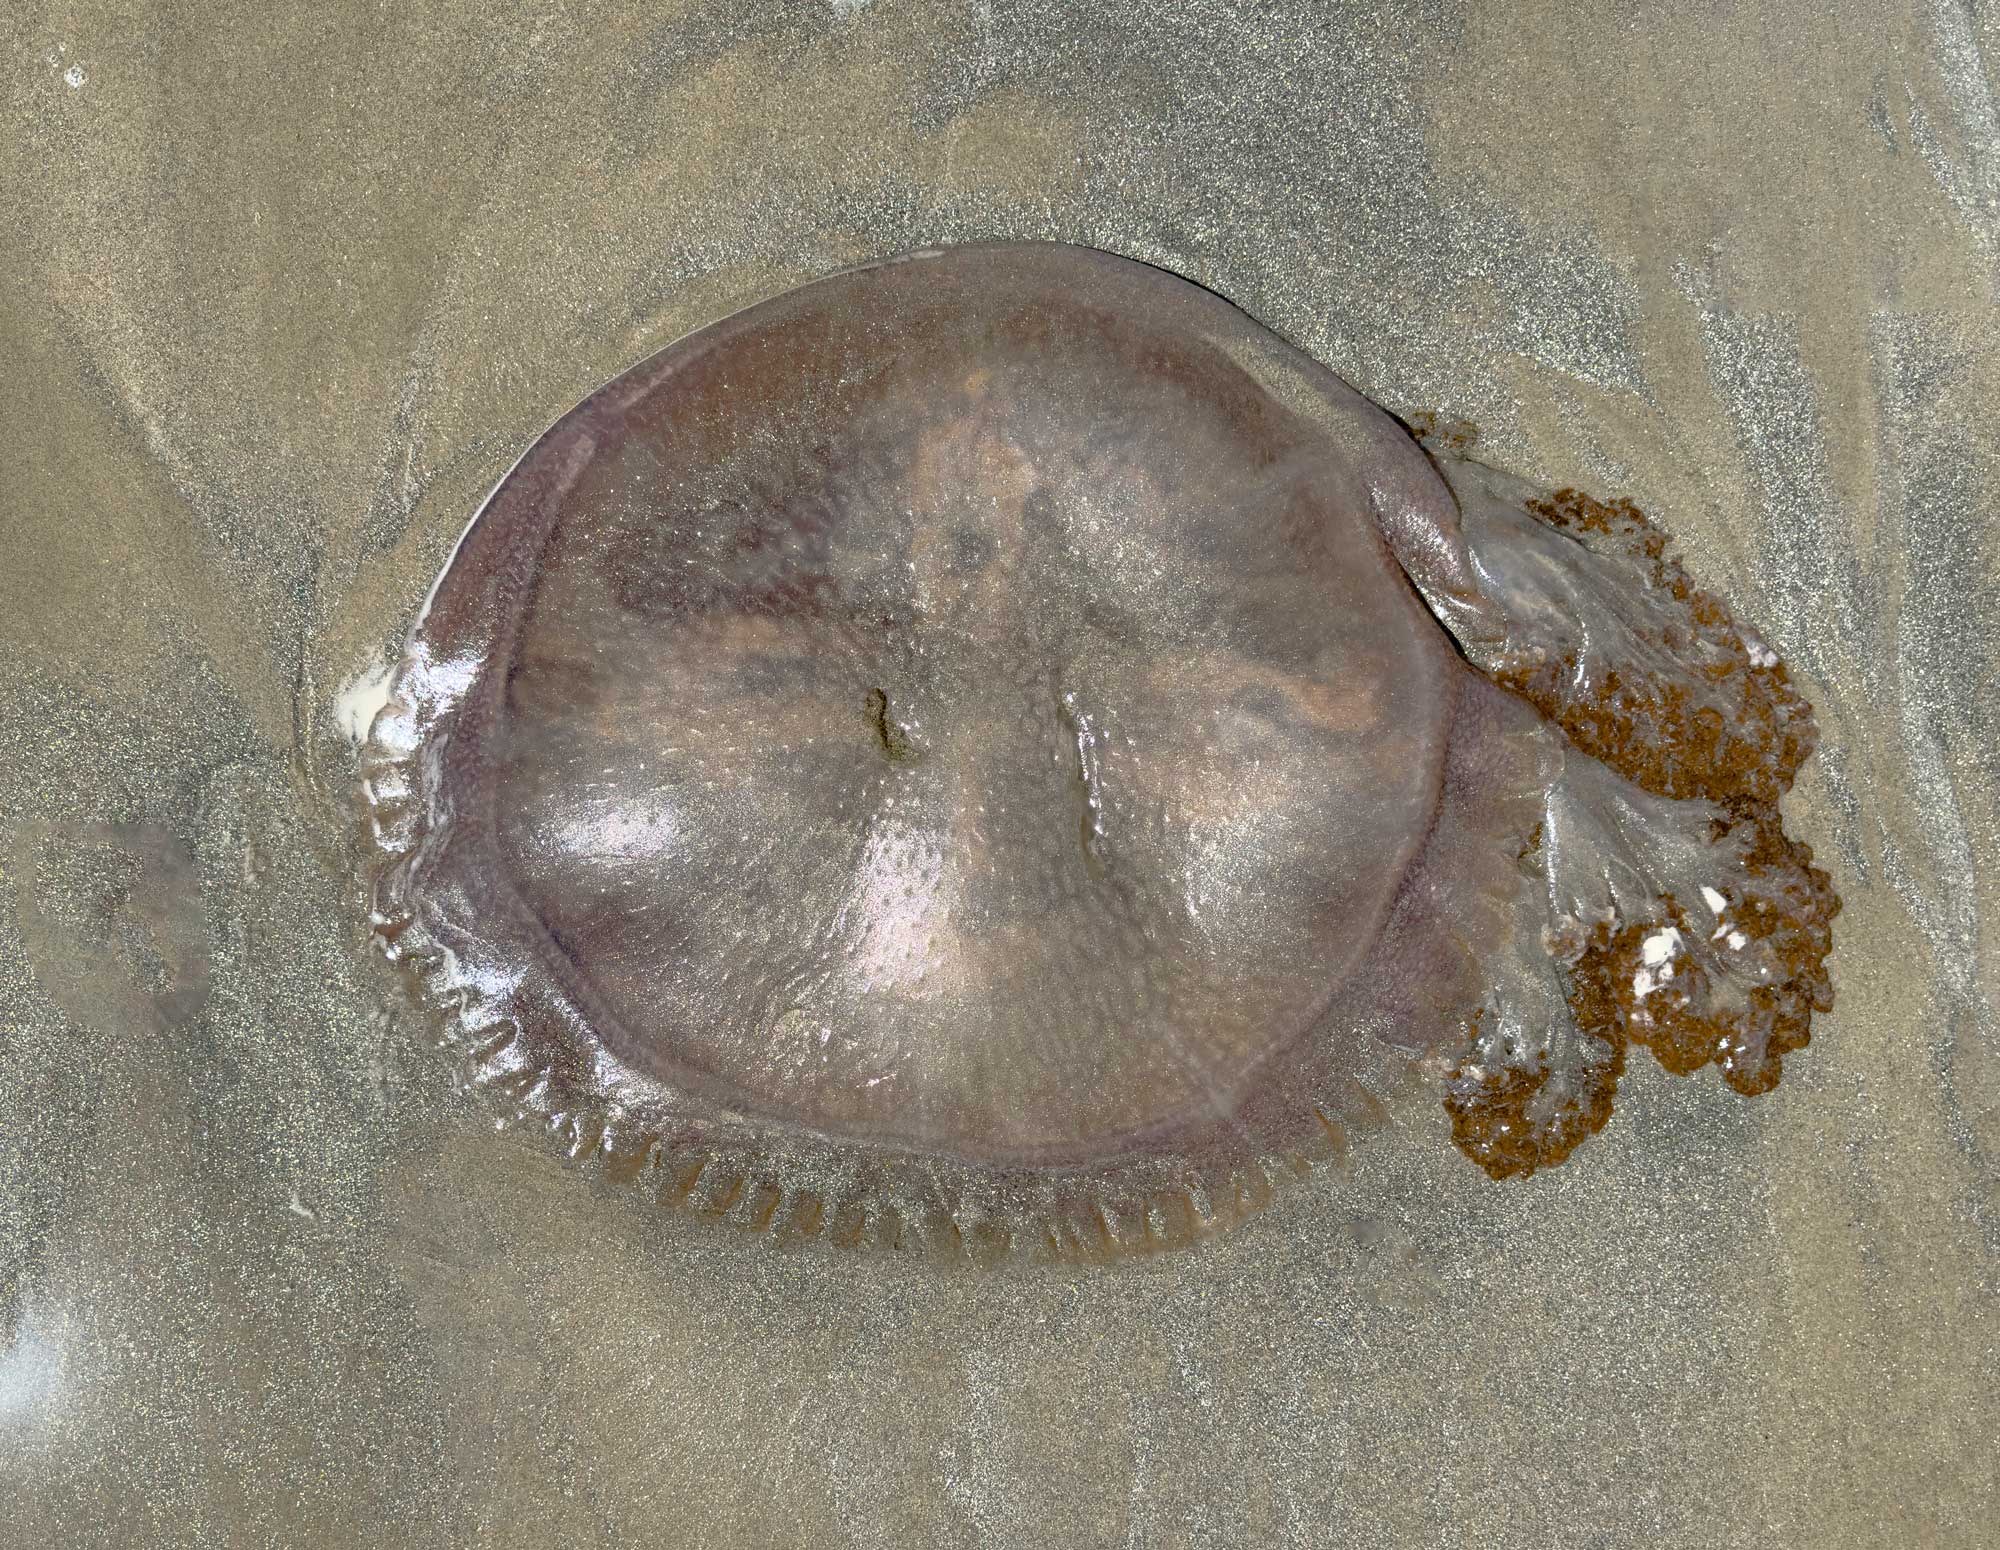 Giant Jellyfish on the beach